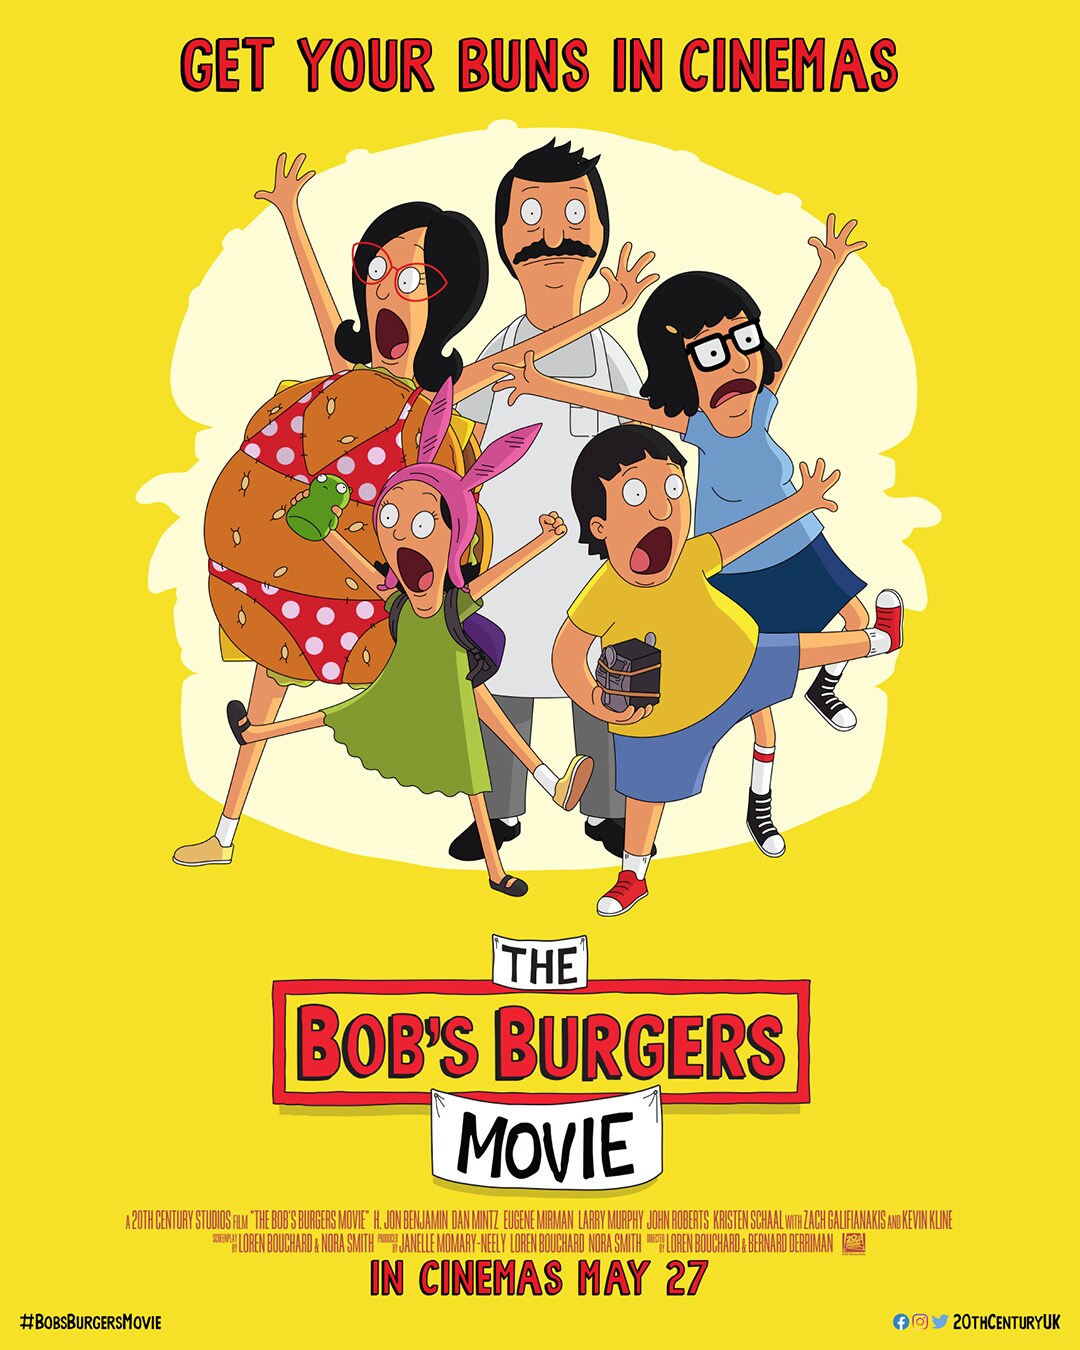 The BOB'S BURGERS MOVIE - IN CINEMAS MAY 27